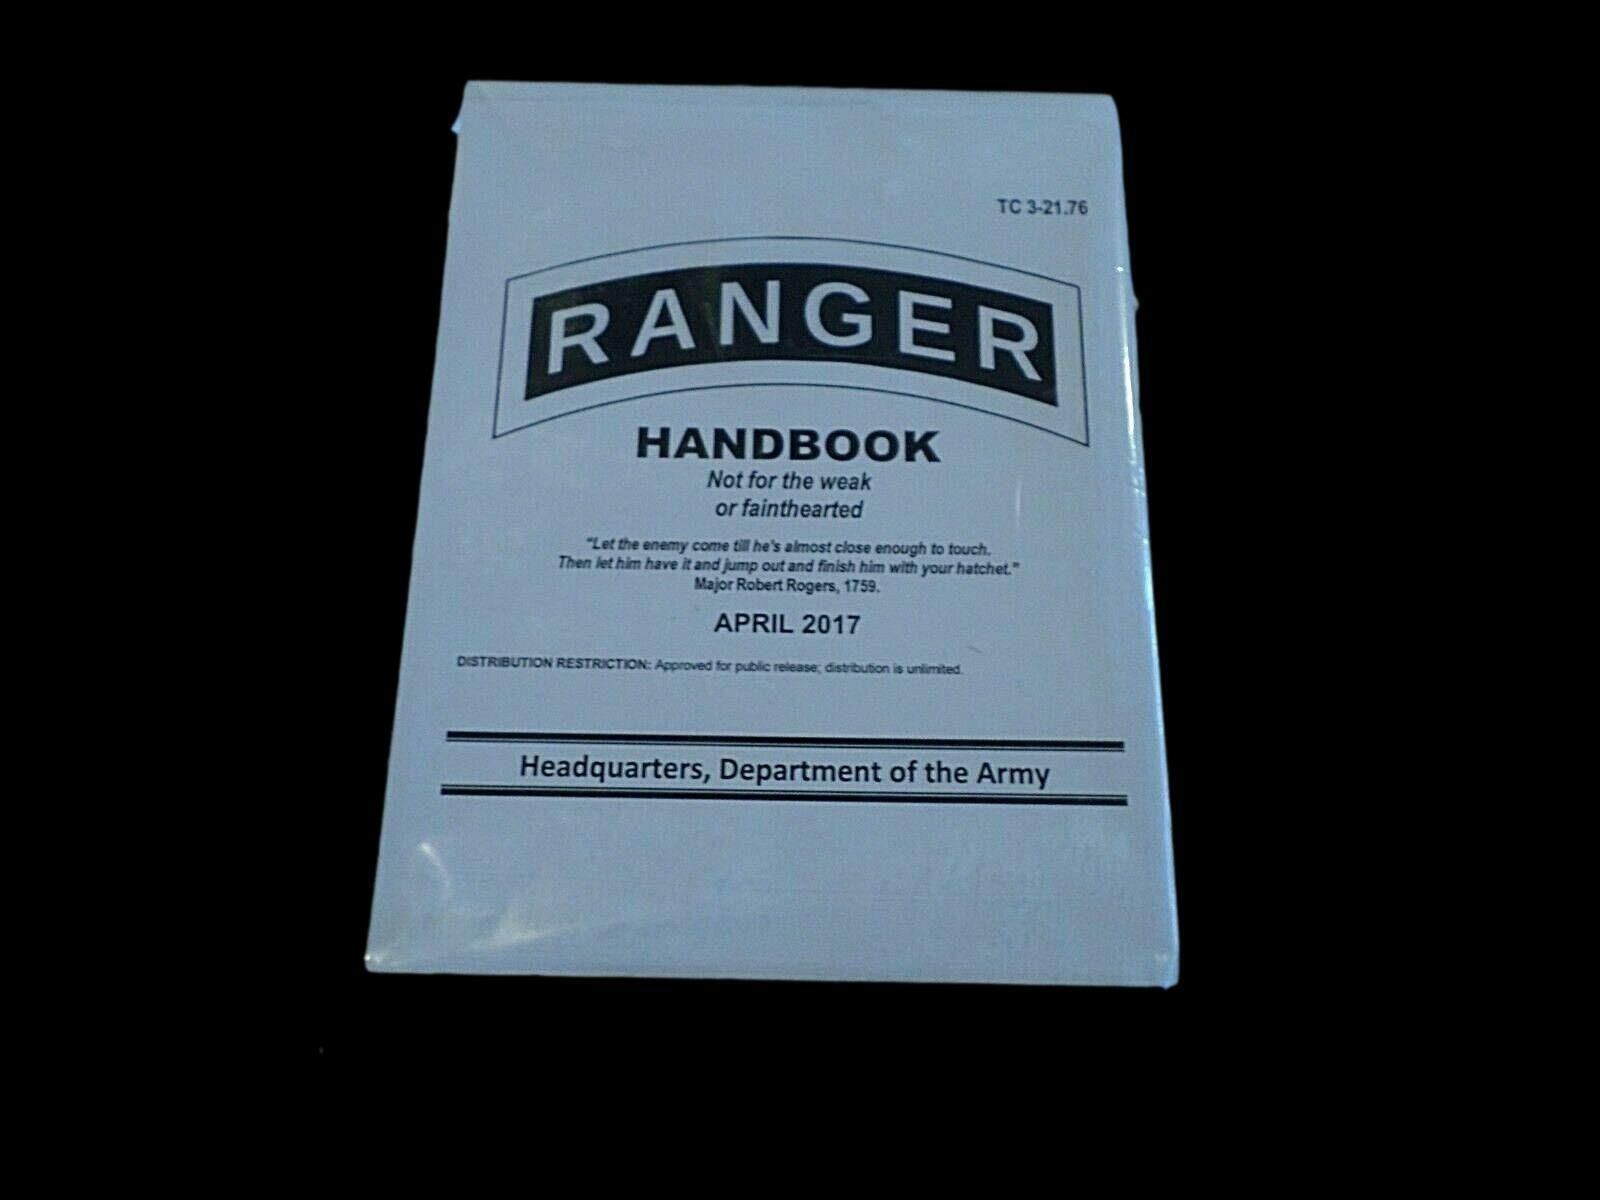 U.S ARMY RANGER HANDBOOK TRAINING BOOK MILITARY RANGER GUIDE BOOK